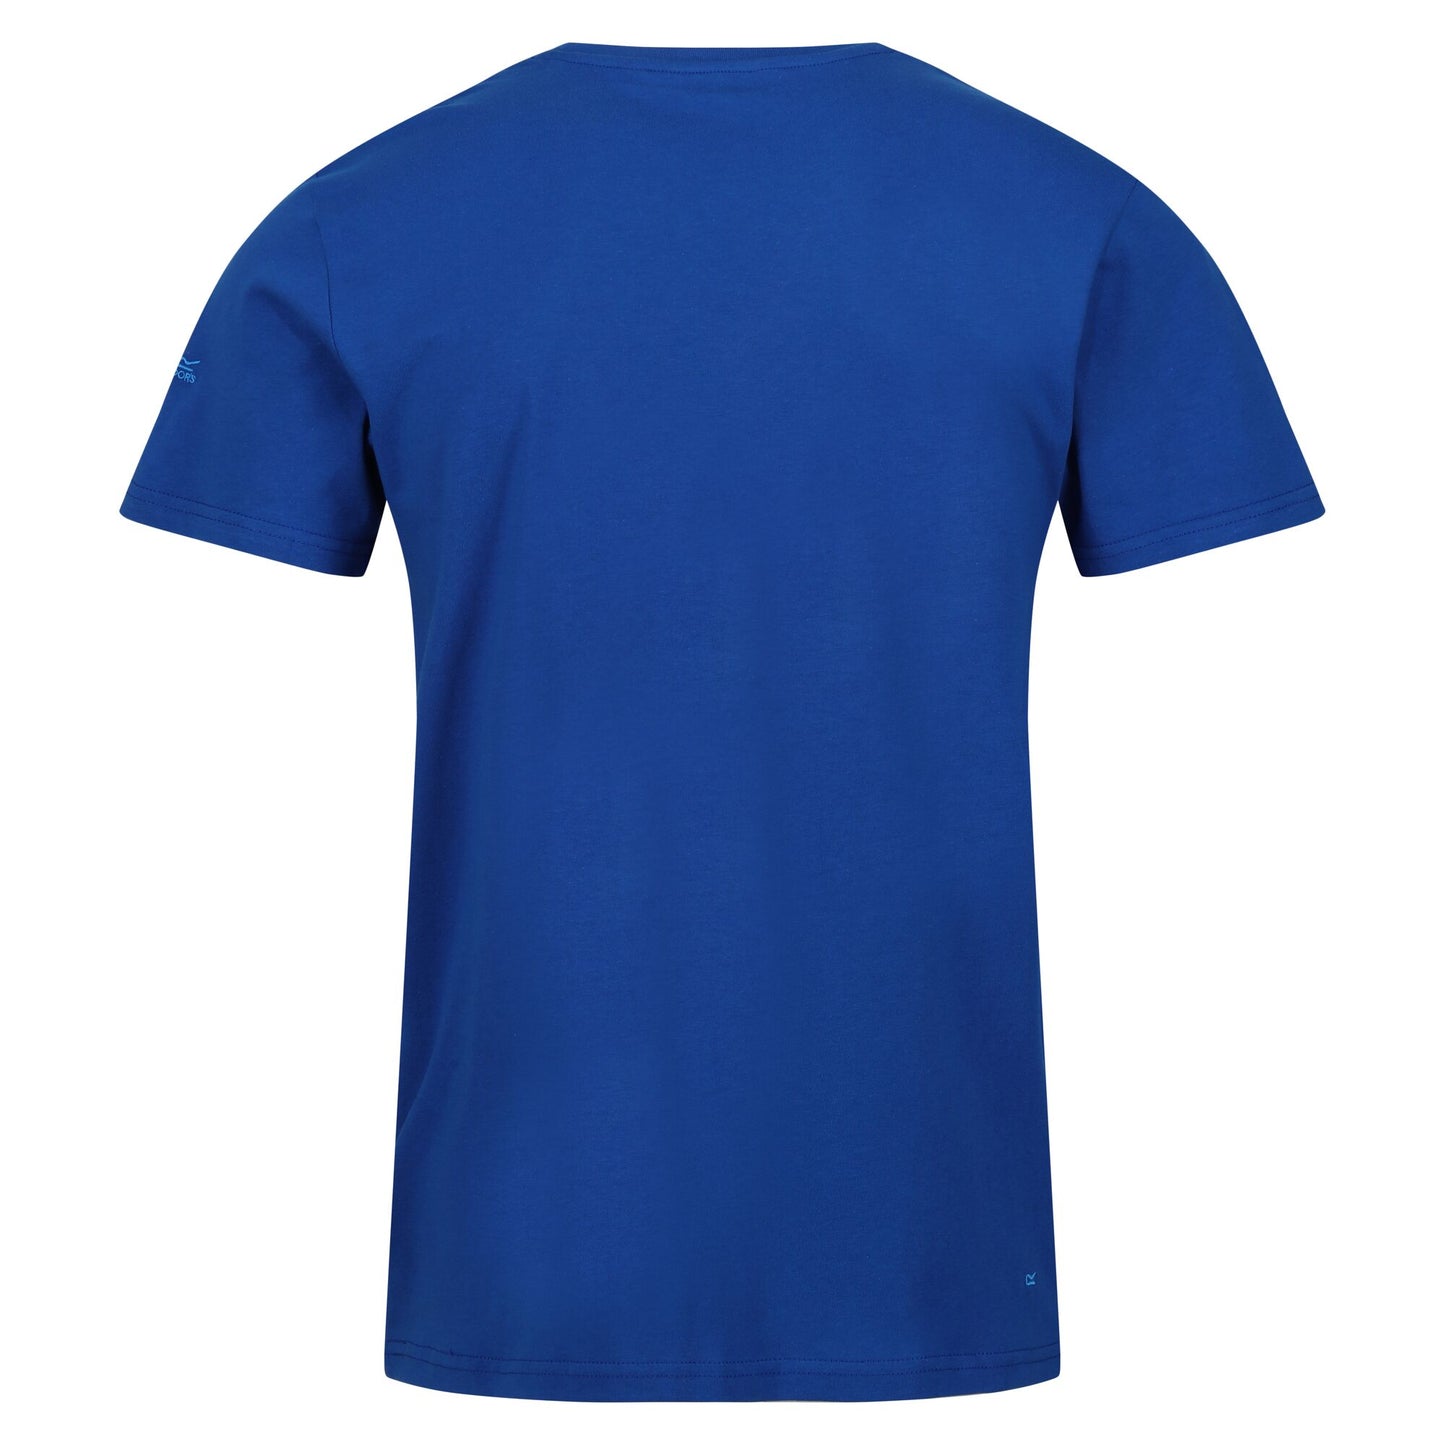 Regatta RMT263 520 Cline VII Royal Blue T-Shirt